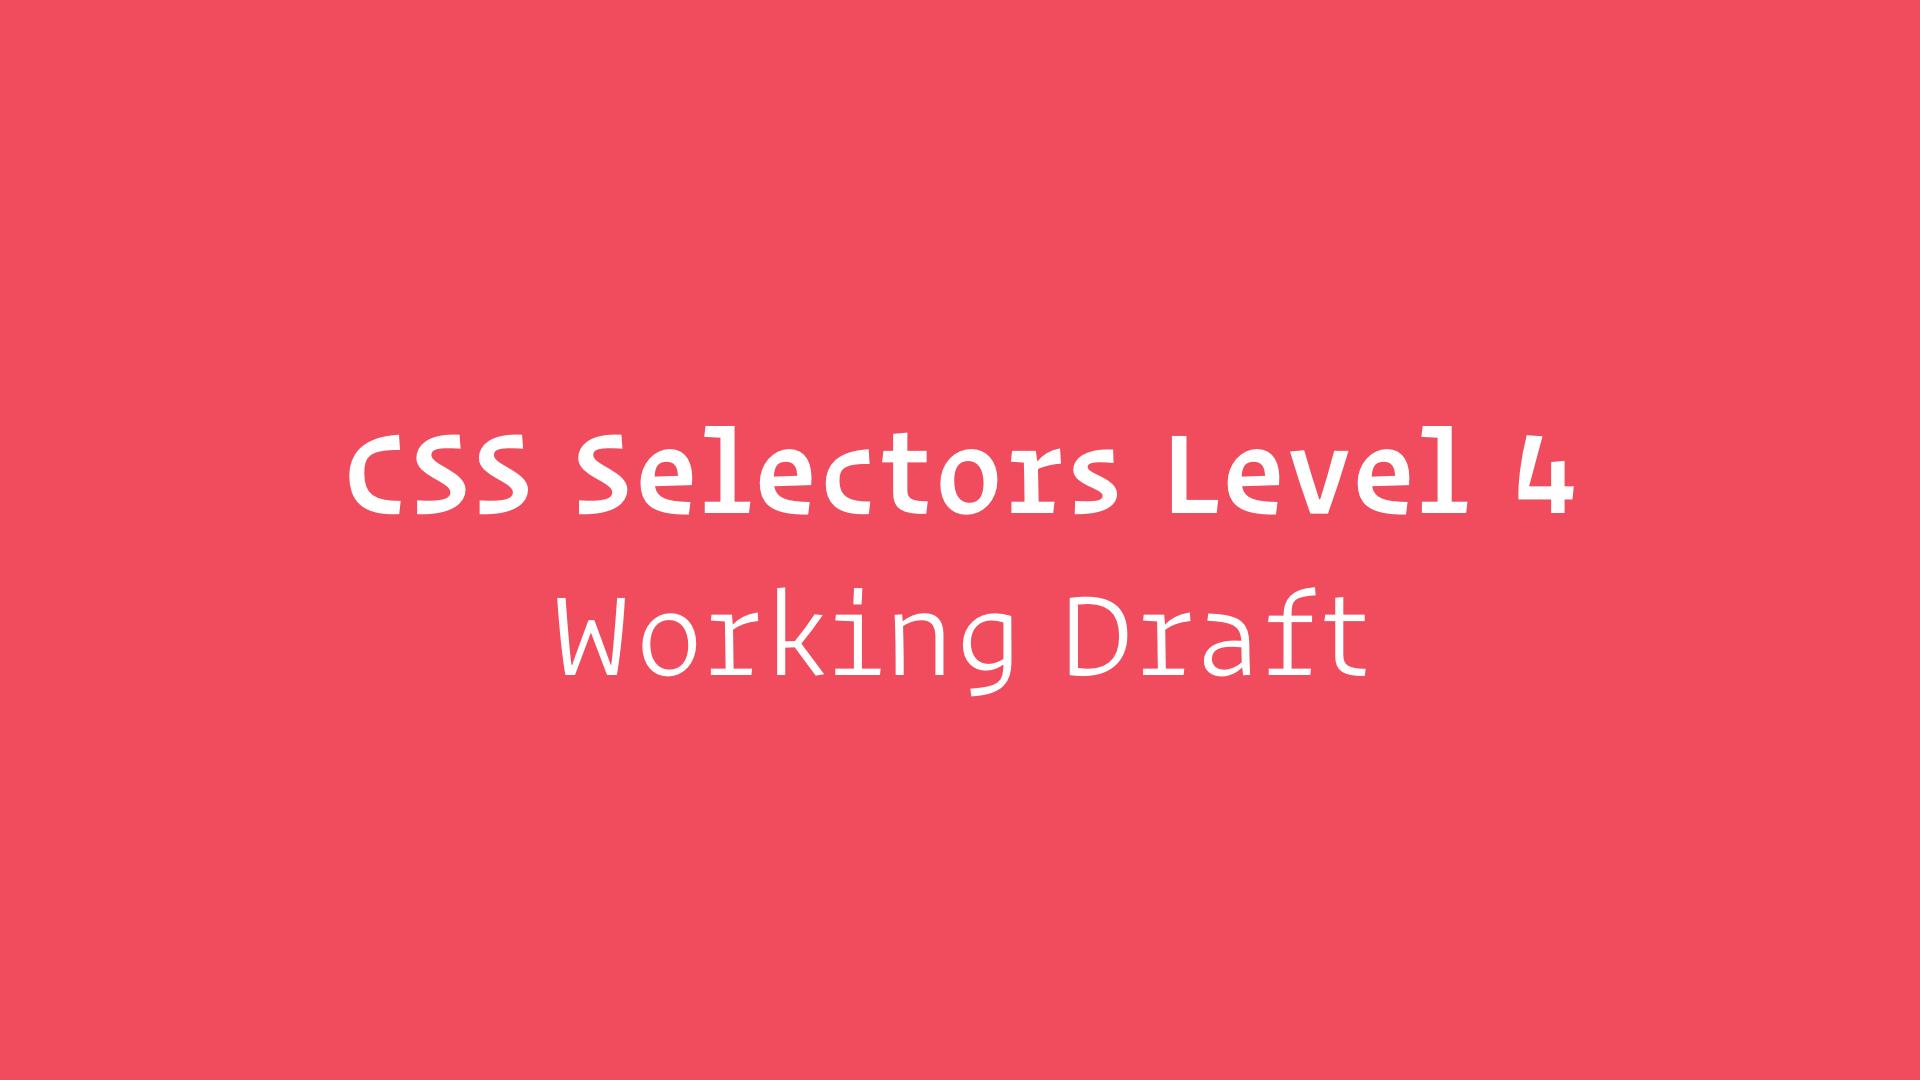 slide: CSS Selectors Level 4 Working Draft